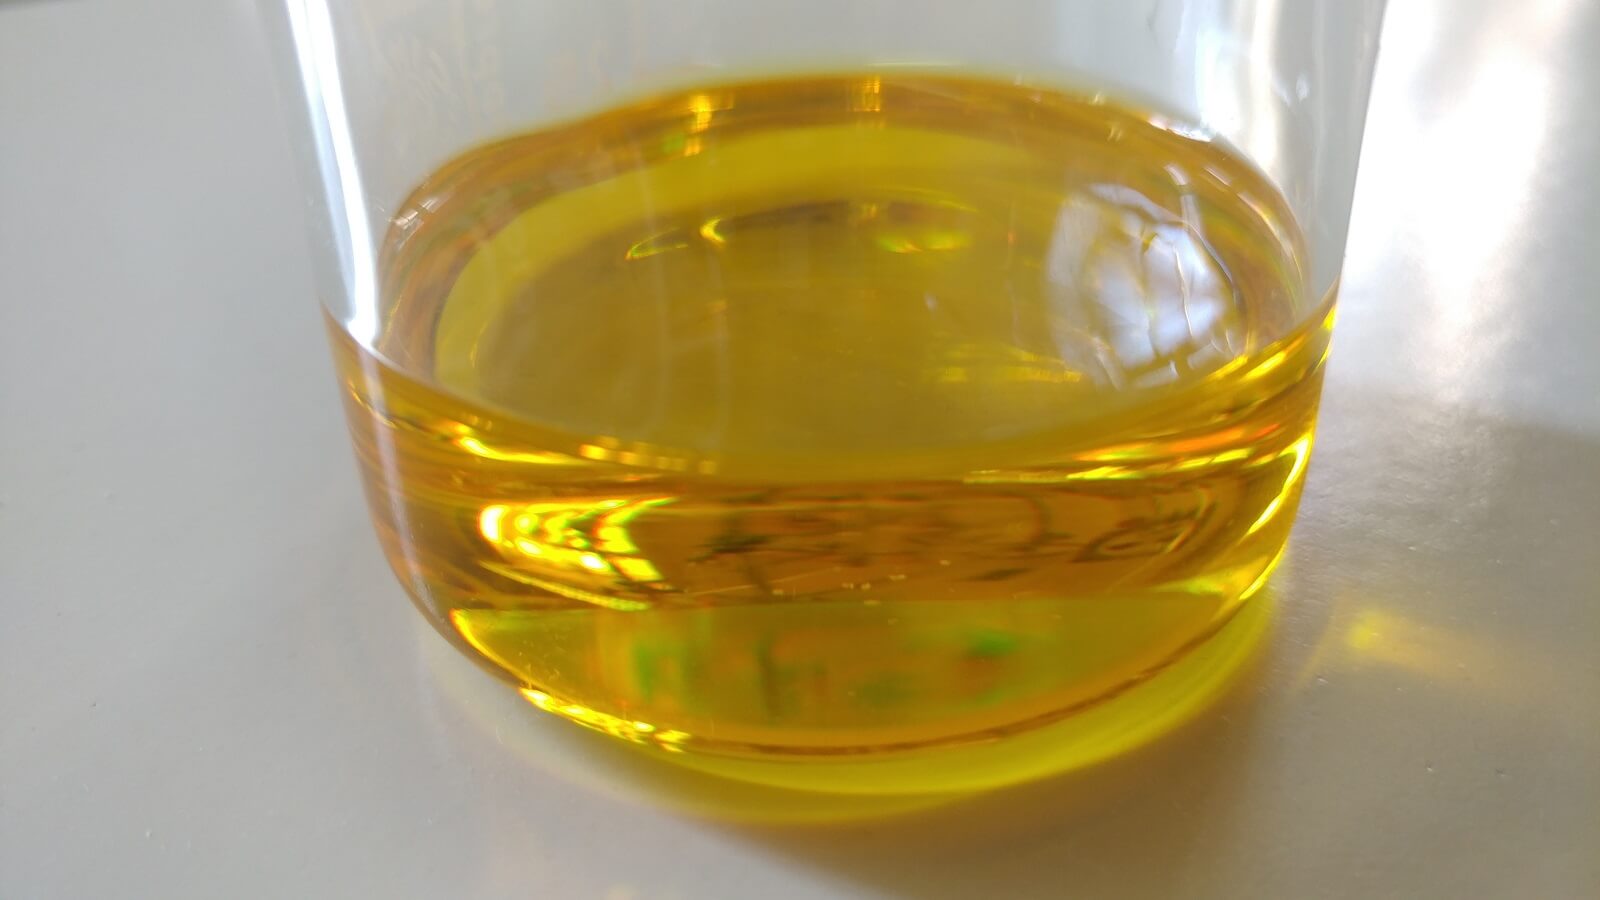 Cinnamaldehyde liquid in a glass container.